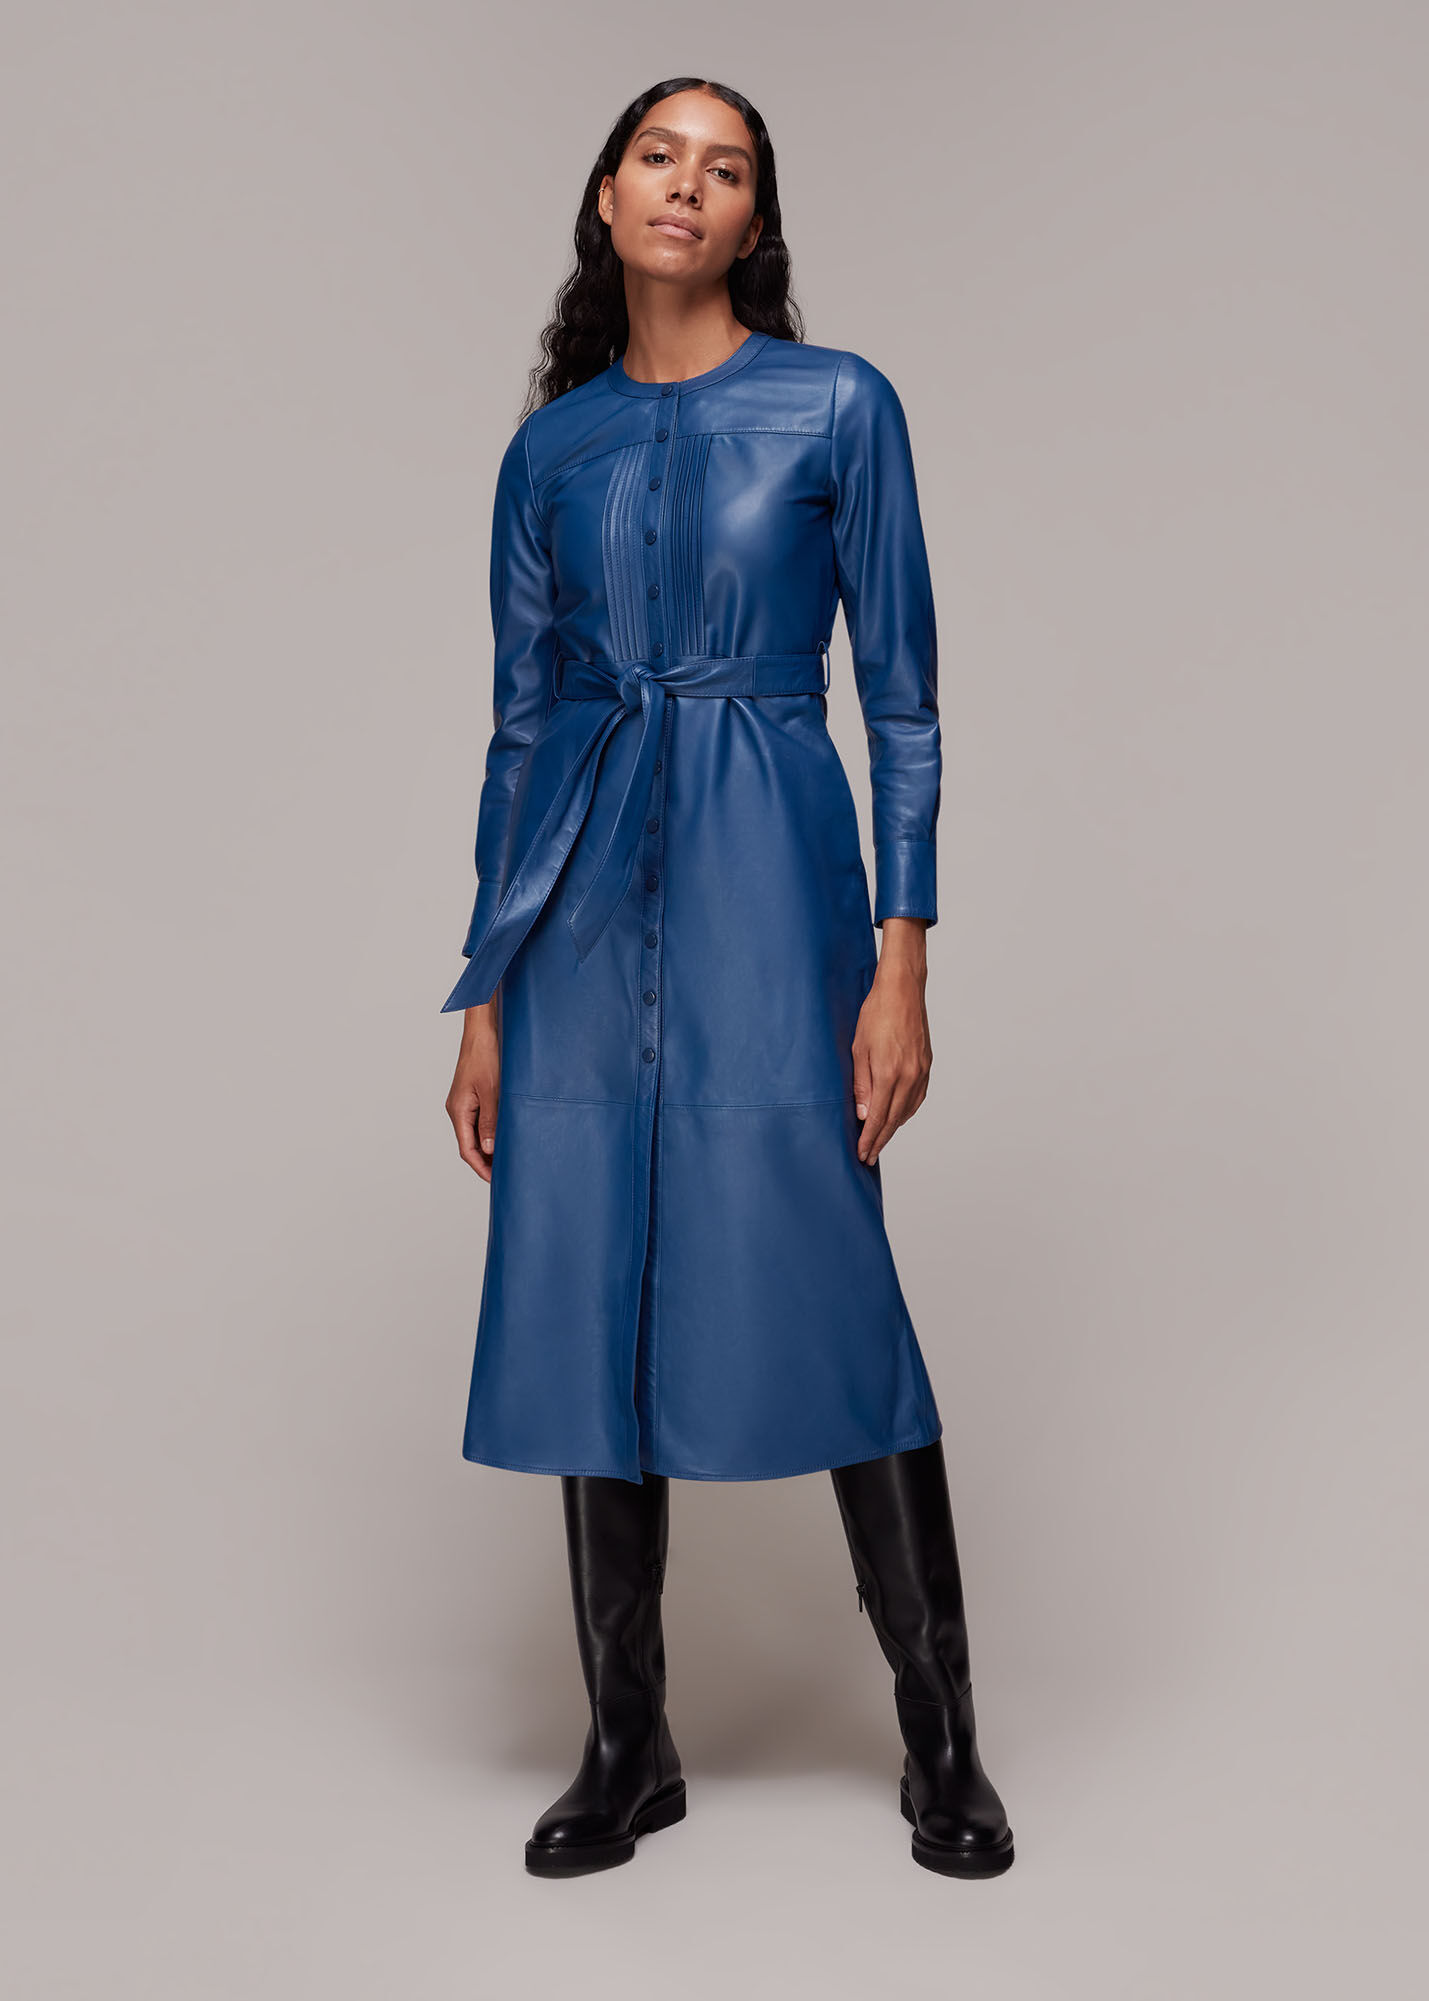 blue leather dress